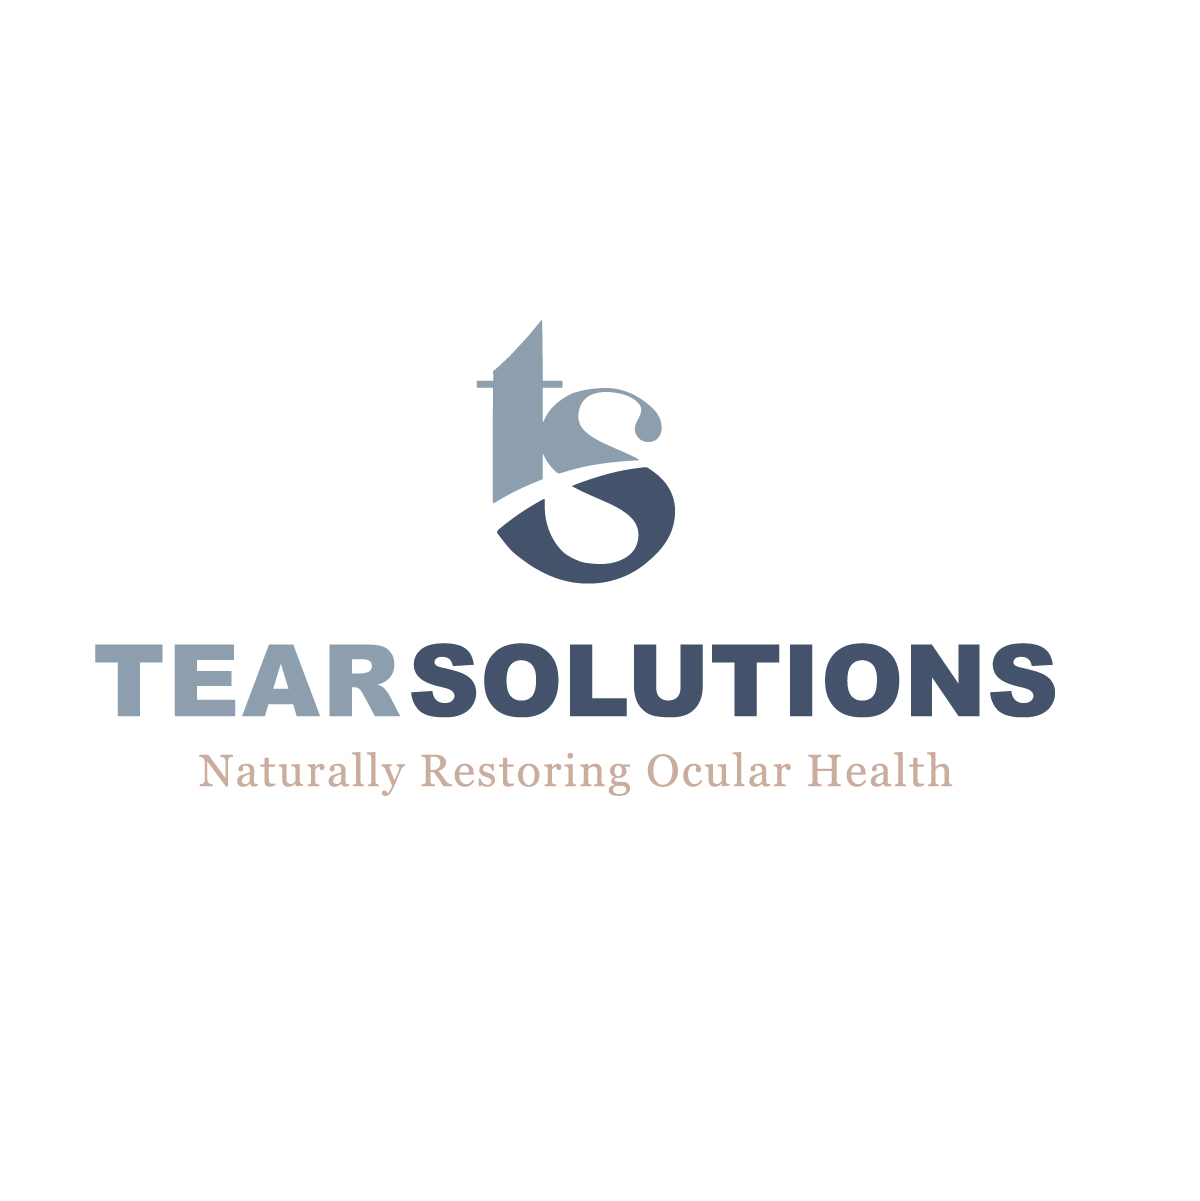 TearSolutions logo.jpg